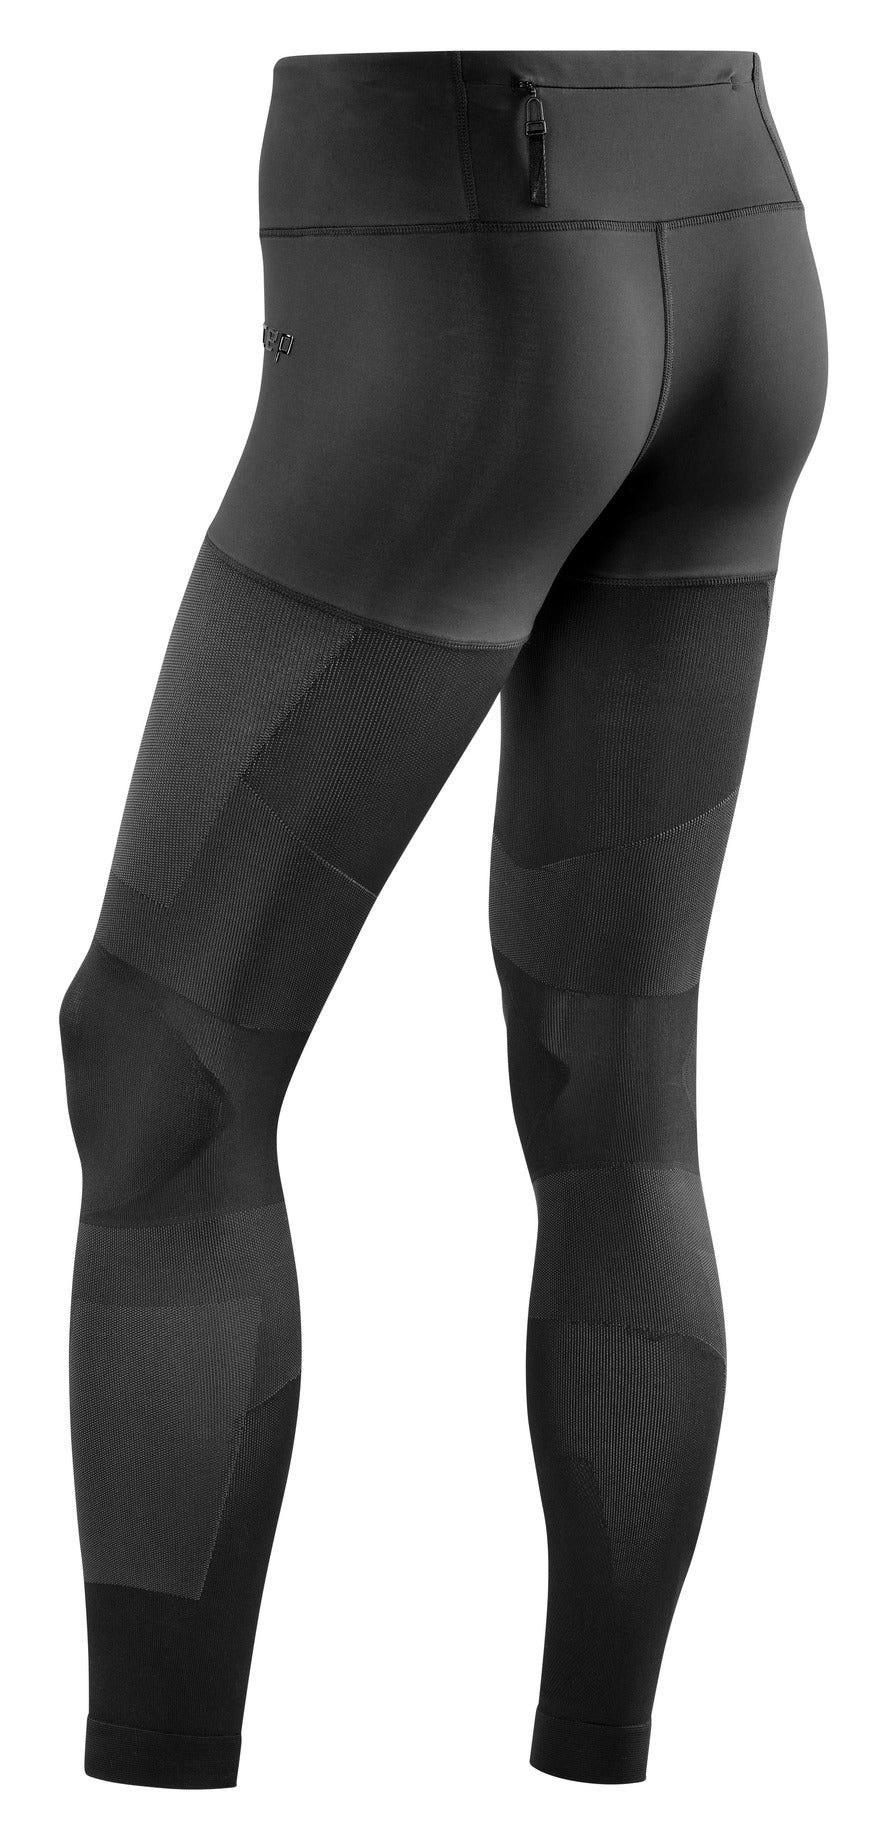 Circulation Activ' 25 moderate compression tights in black